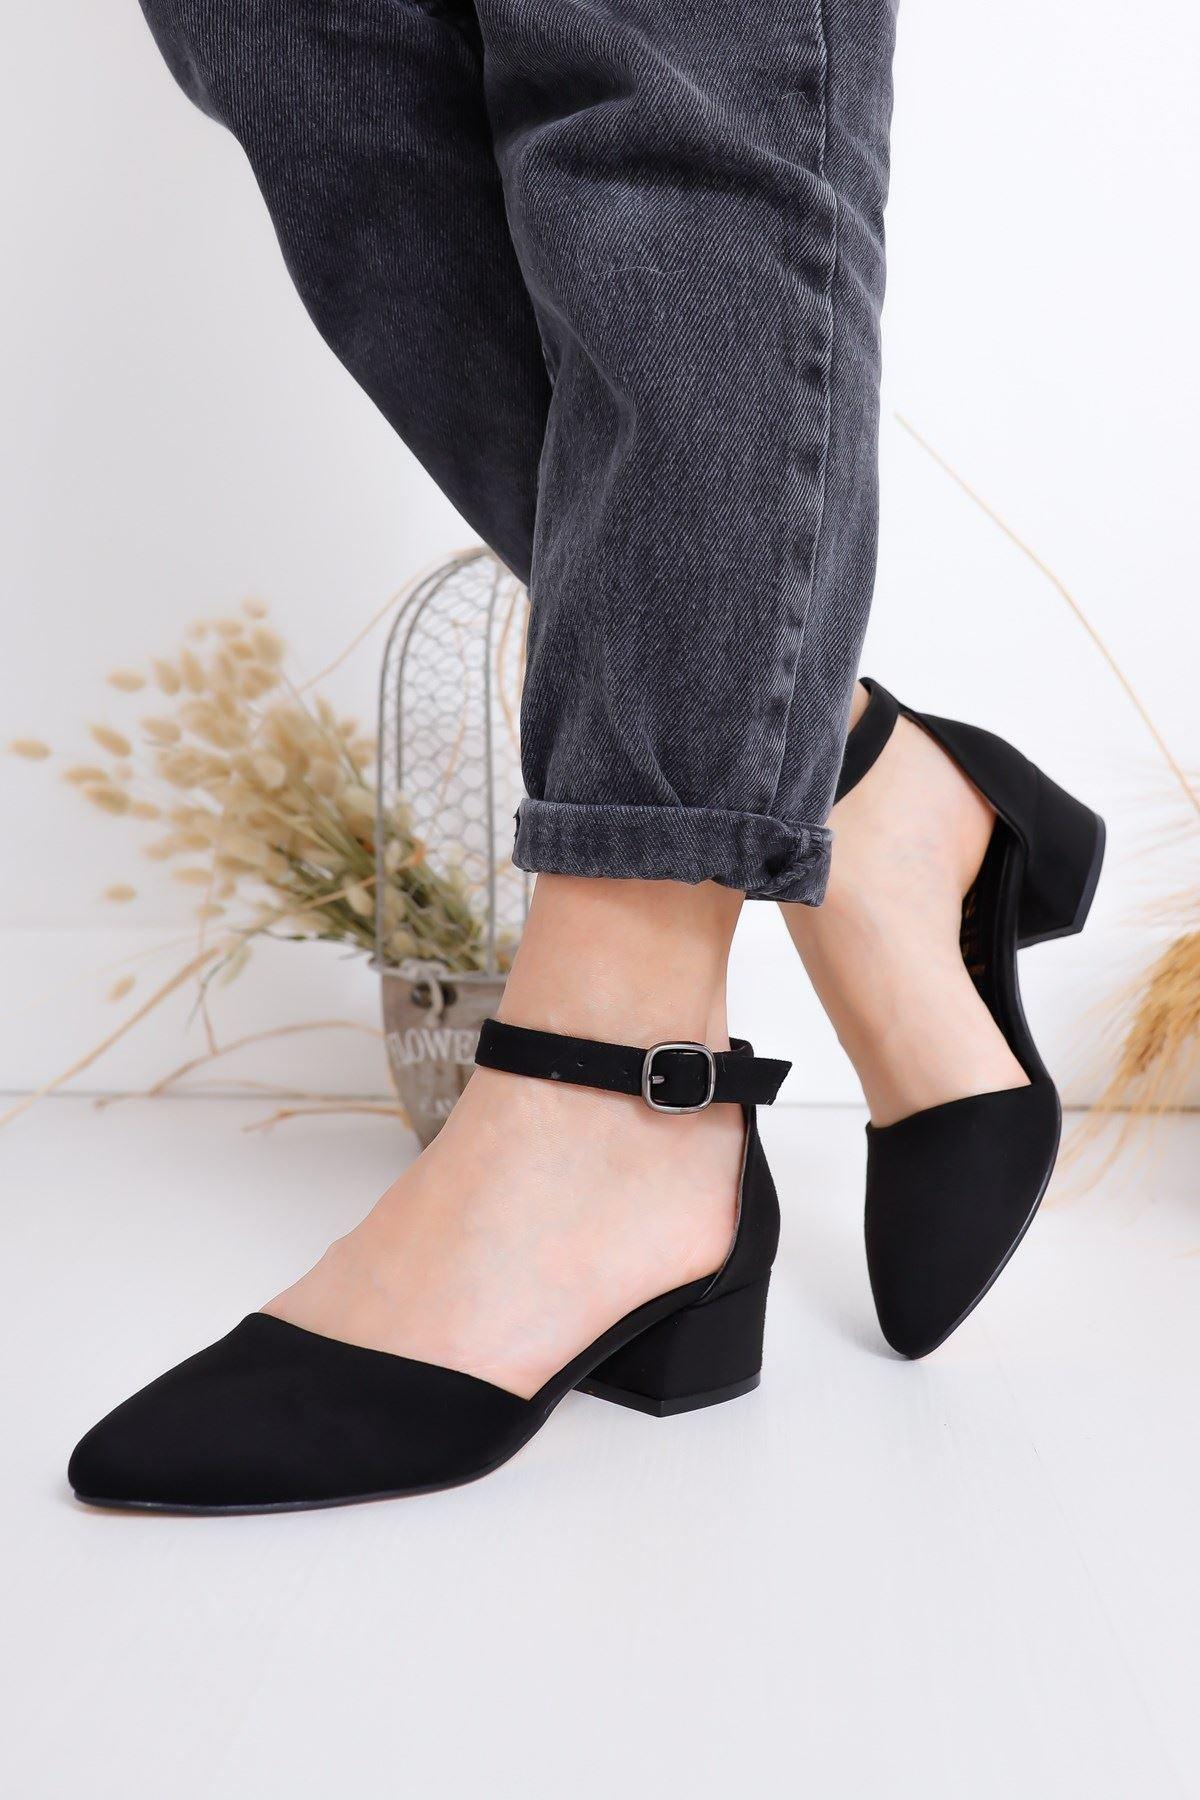 Women's Dary Heels Black Suede Shoes - STREET MODE ™